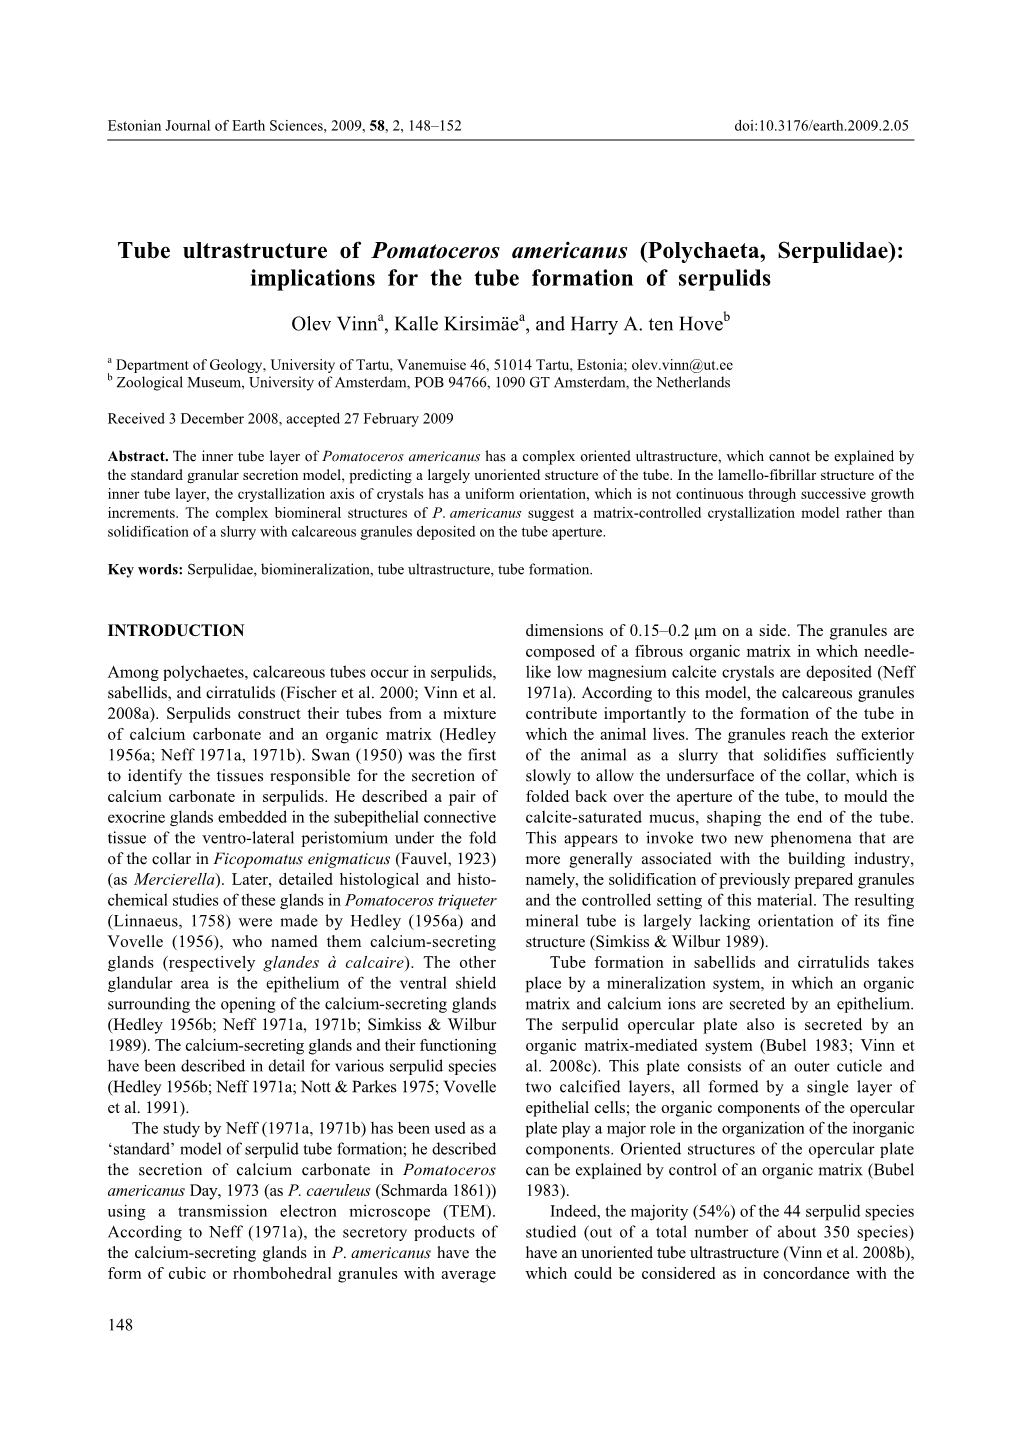 Tube Ultrastructure of Pomatoceros Americanus (Polychaeta, Serpulidae): Implications for the Tube Formation of Serpulids